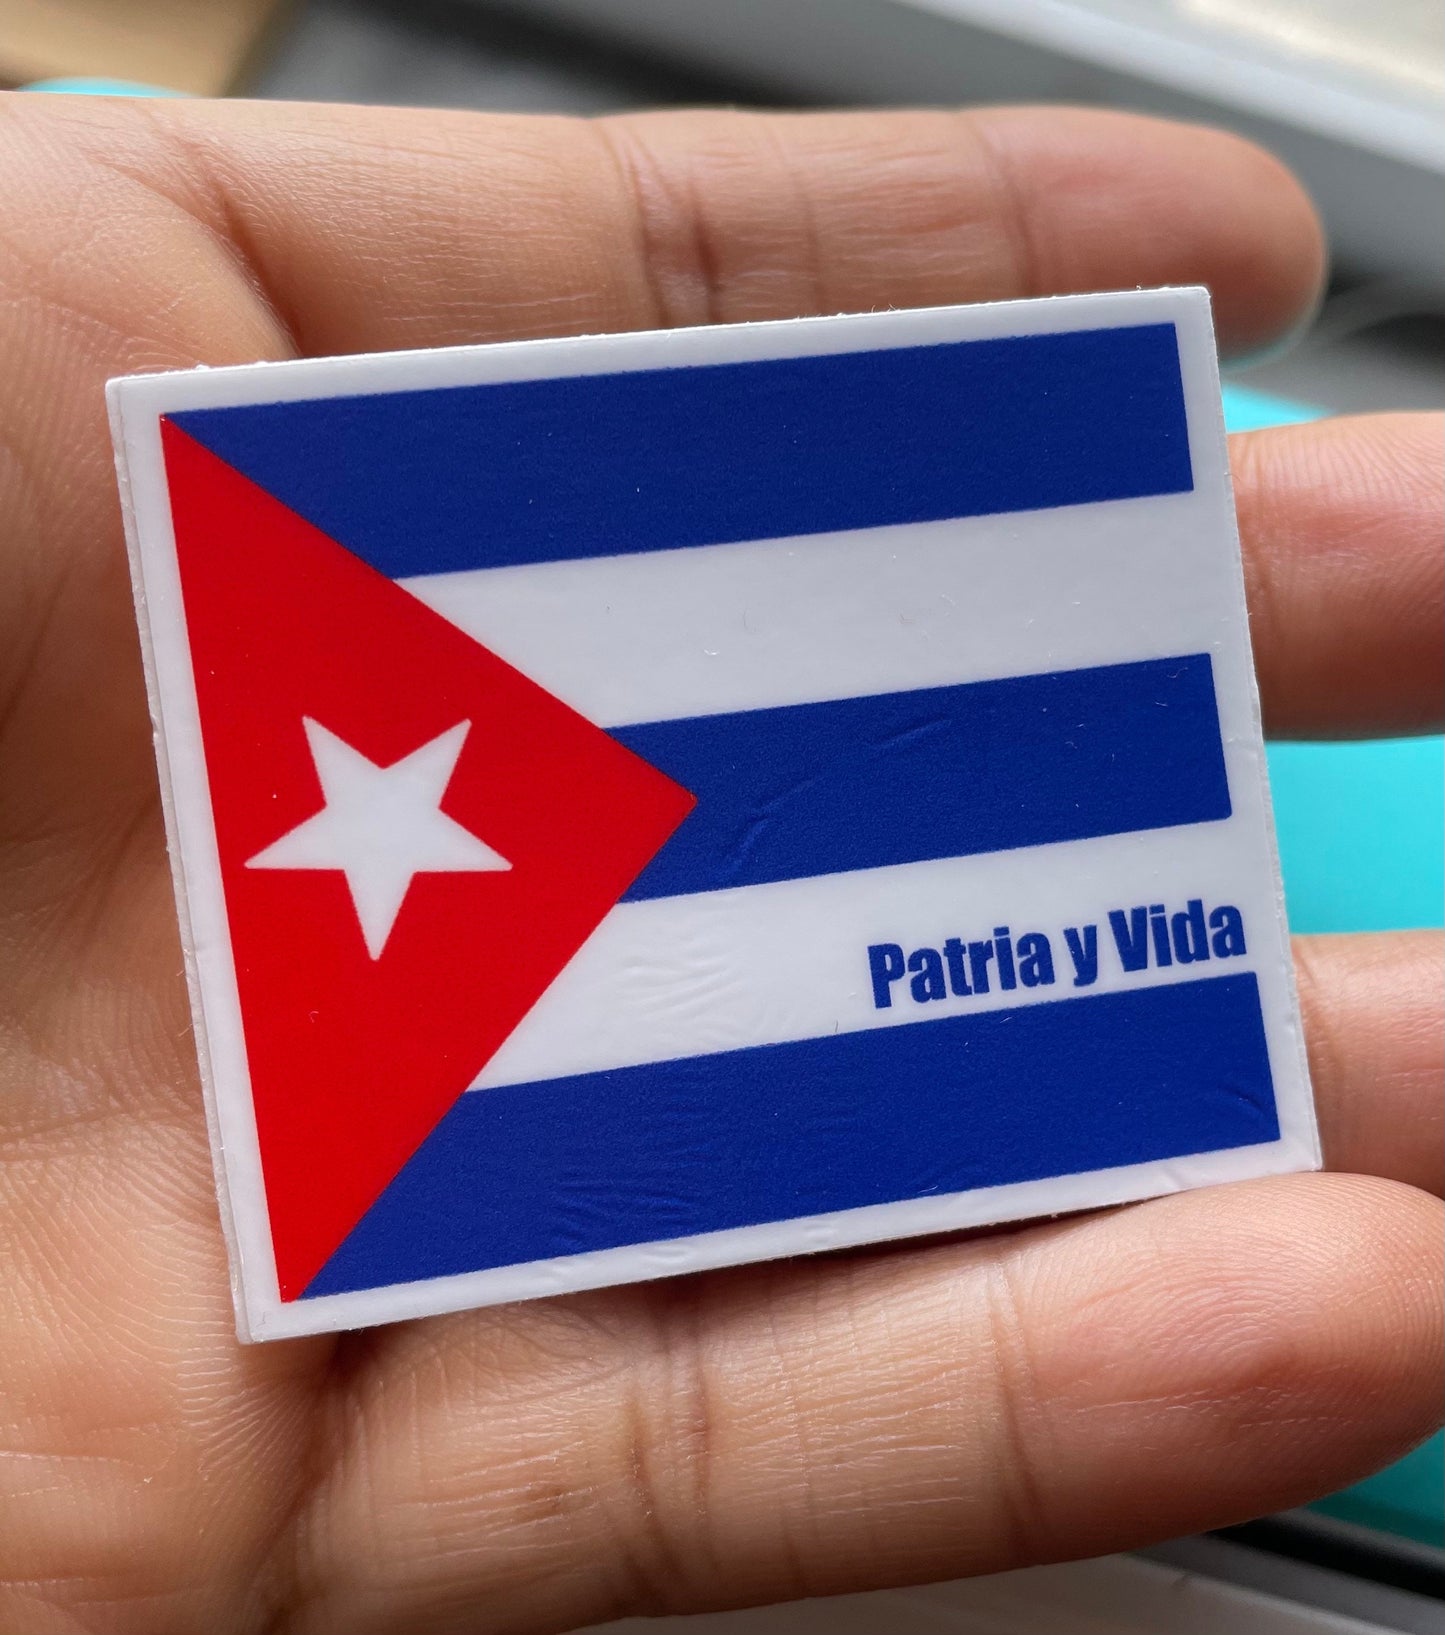 Patria y Vida Flag (blue/red) Vinyl Sticker